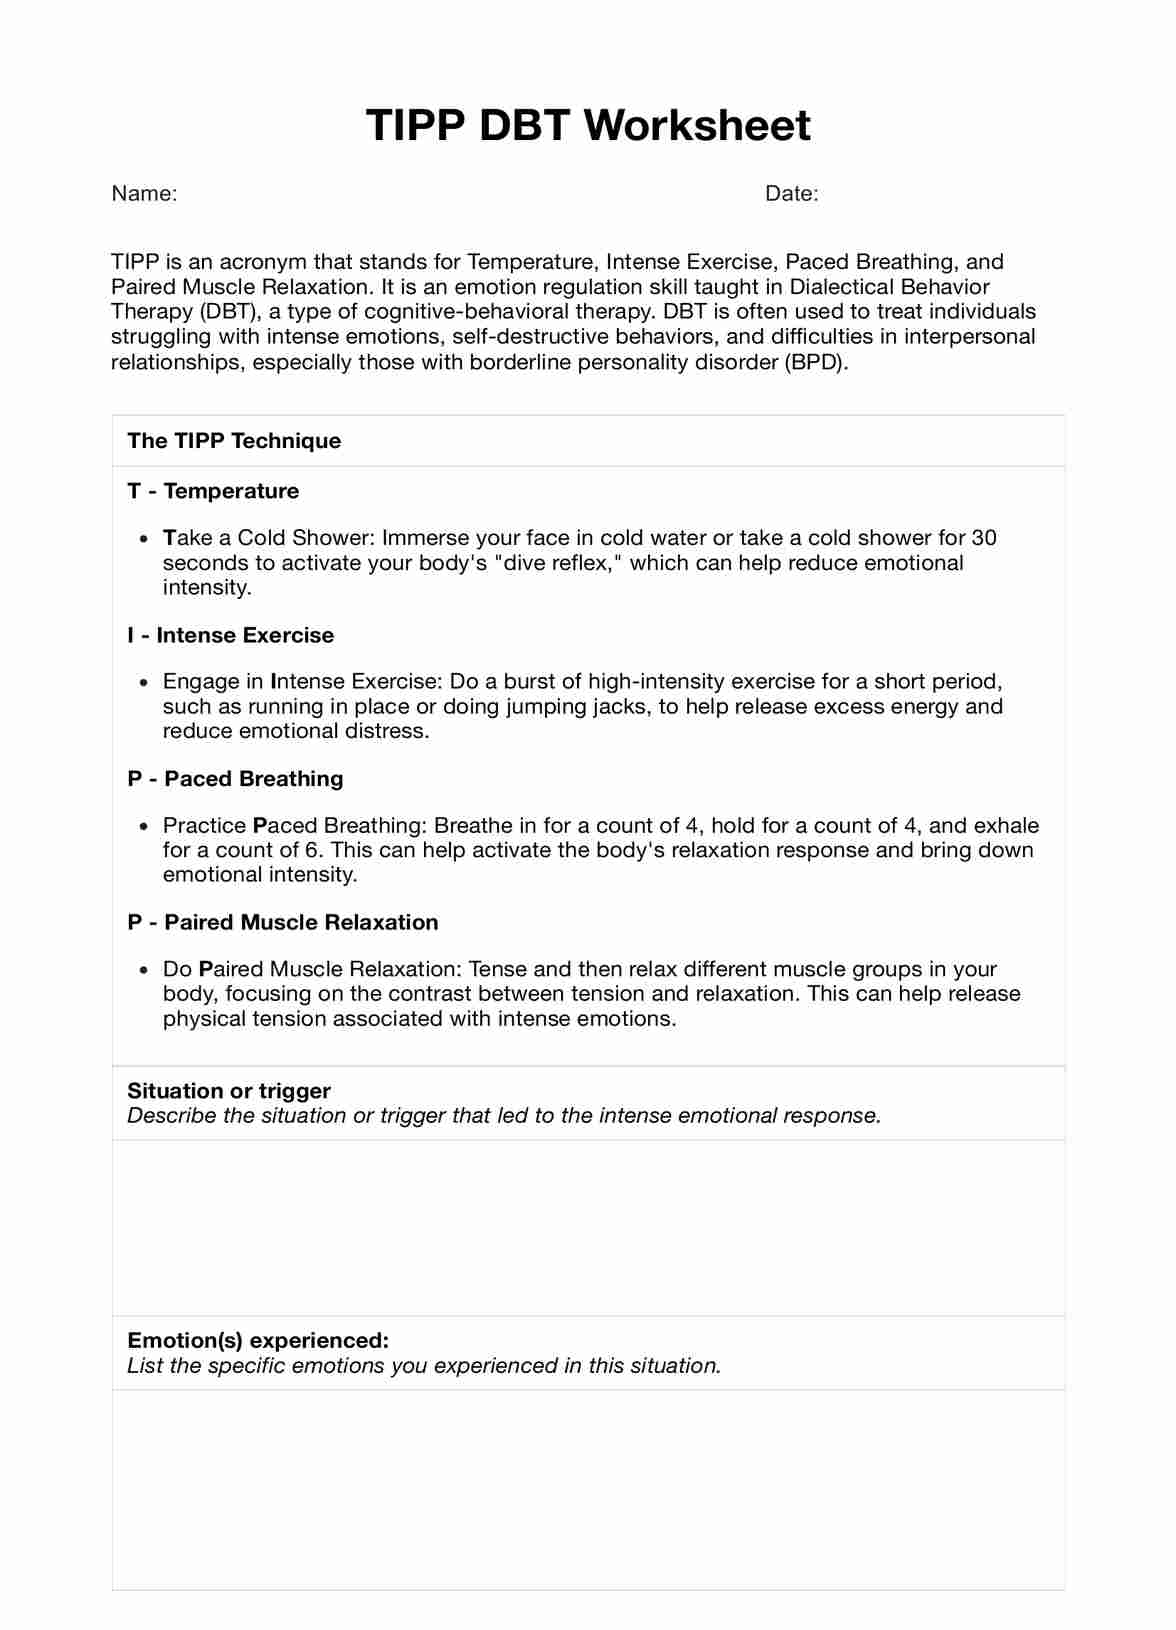 TIPP DBT Worksheets PDF Example